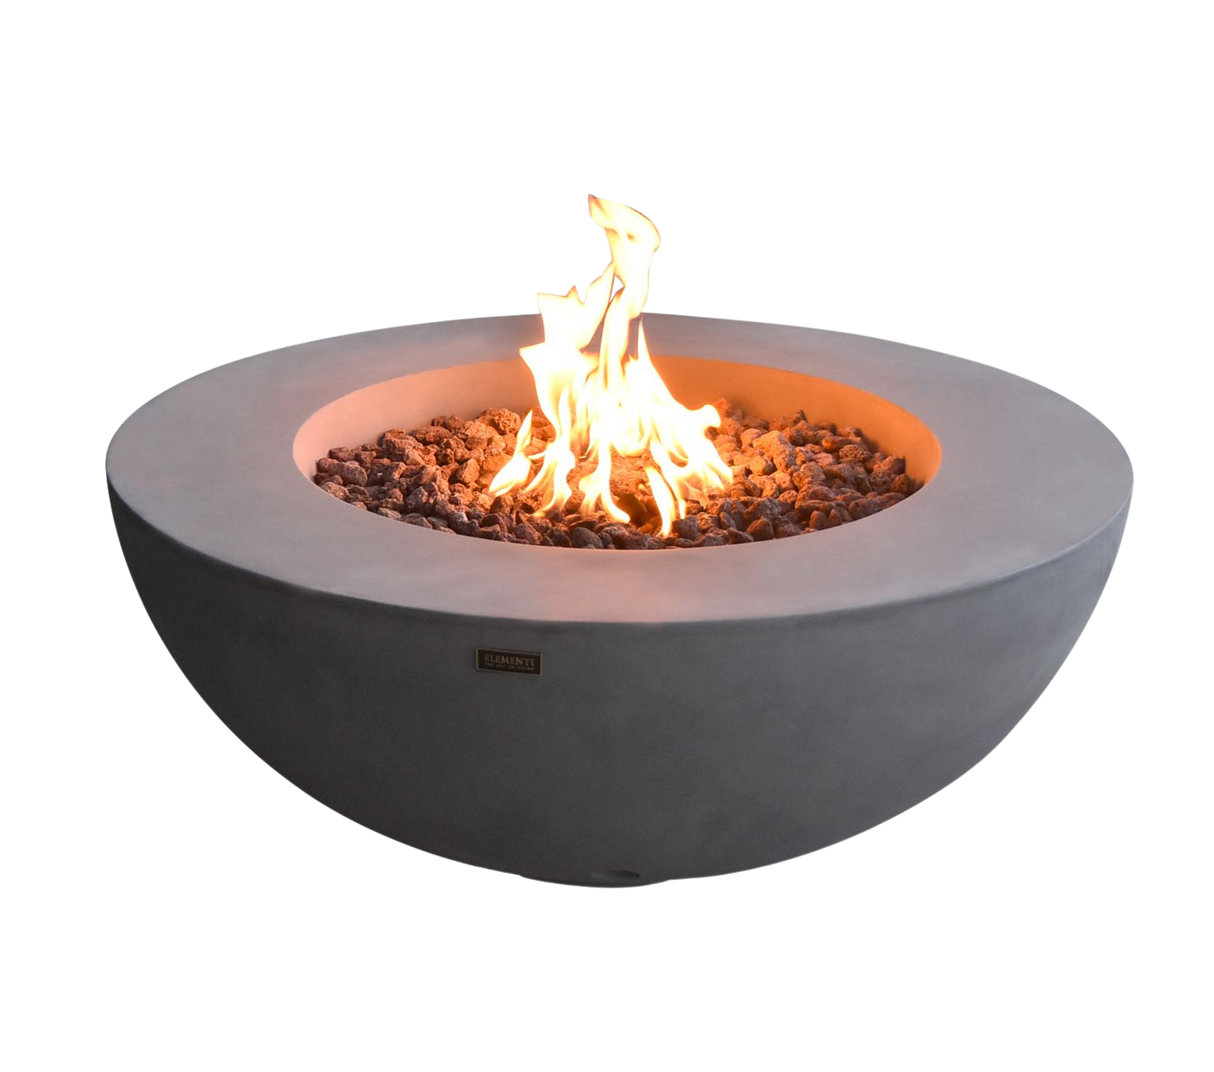 Elementi Lunar Bowl Fire Table OFG101